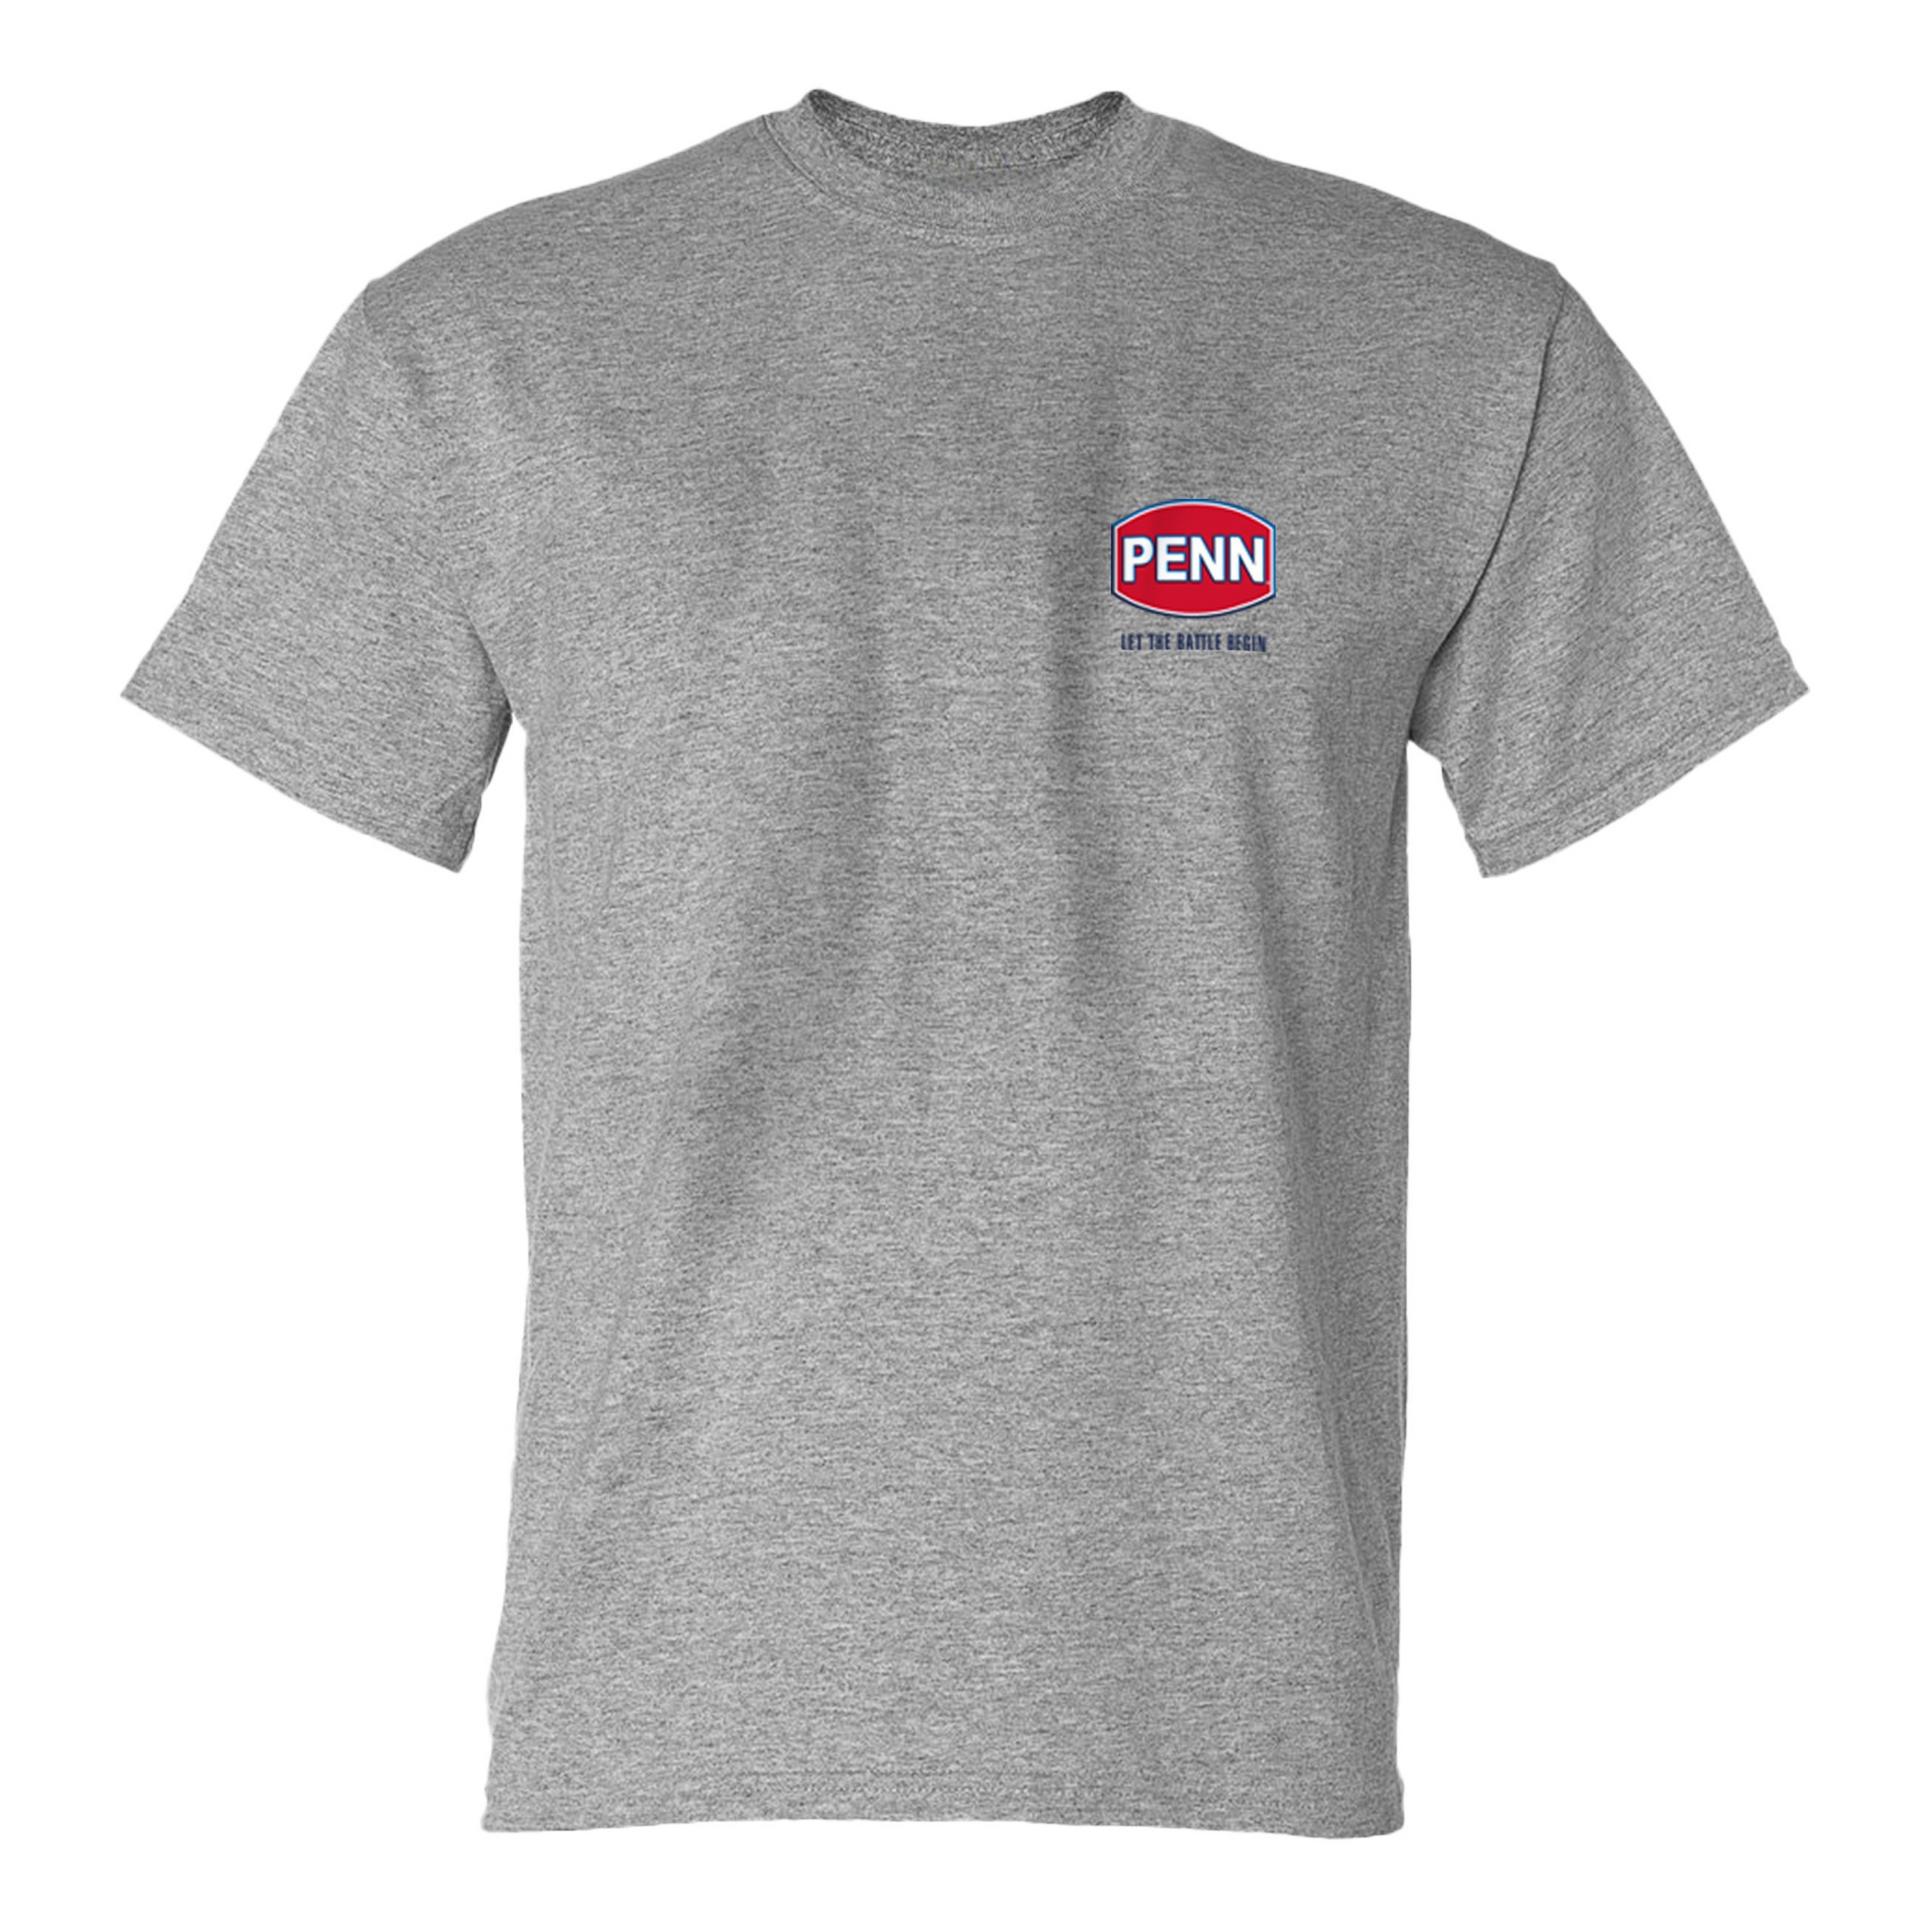 Penn Reels Authentic Fishing Gear Mens Long Sleeve Shirt Size M